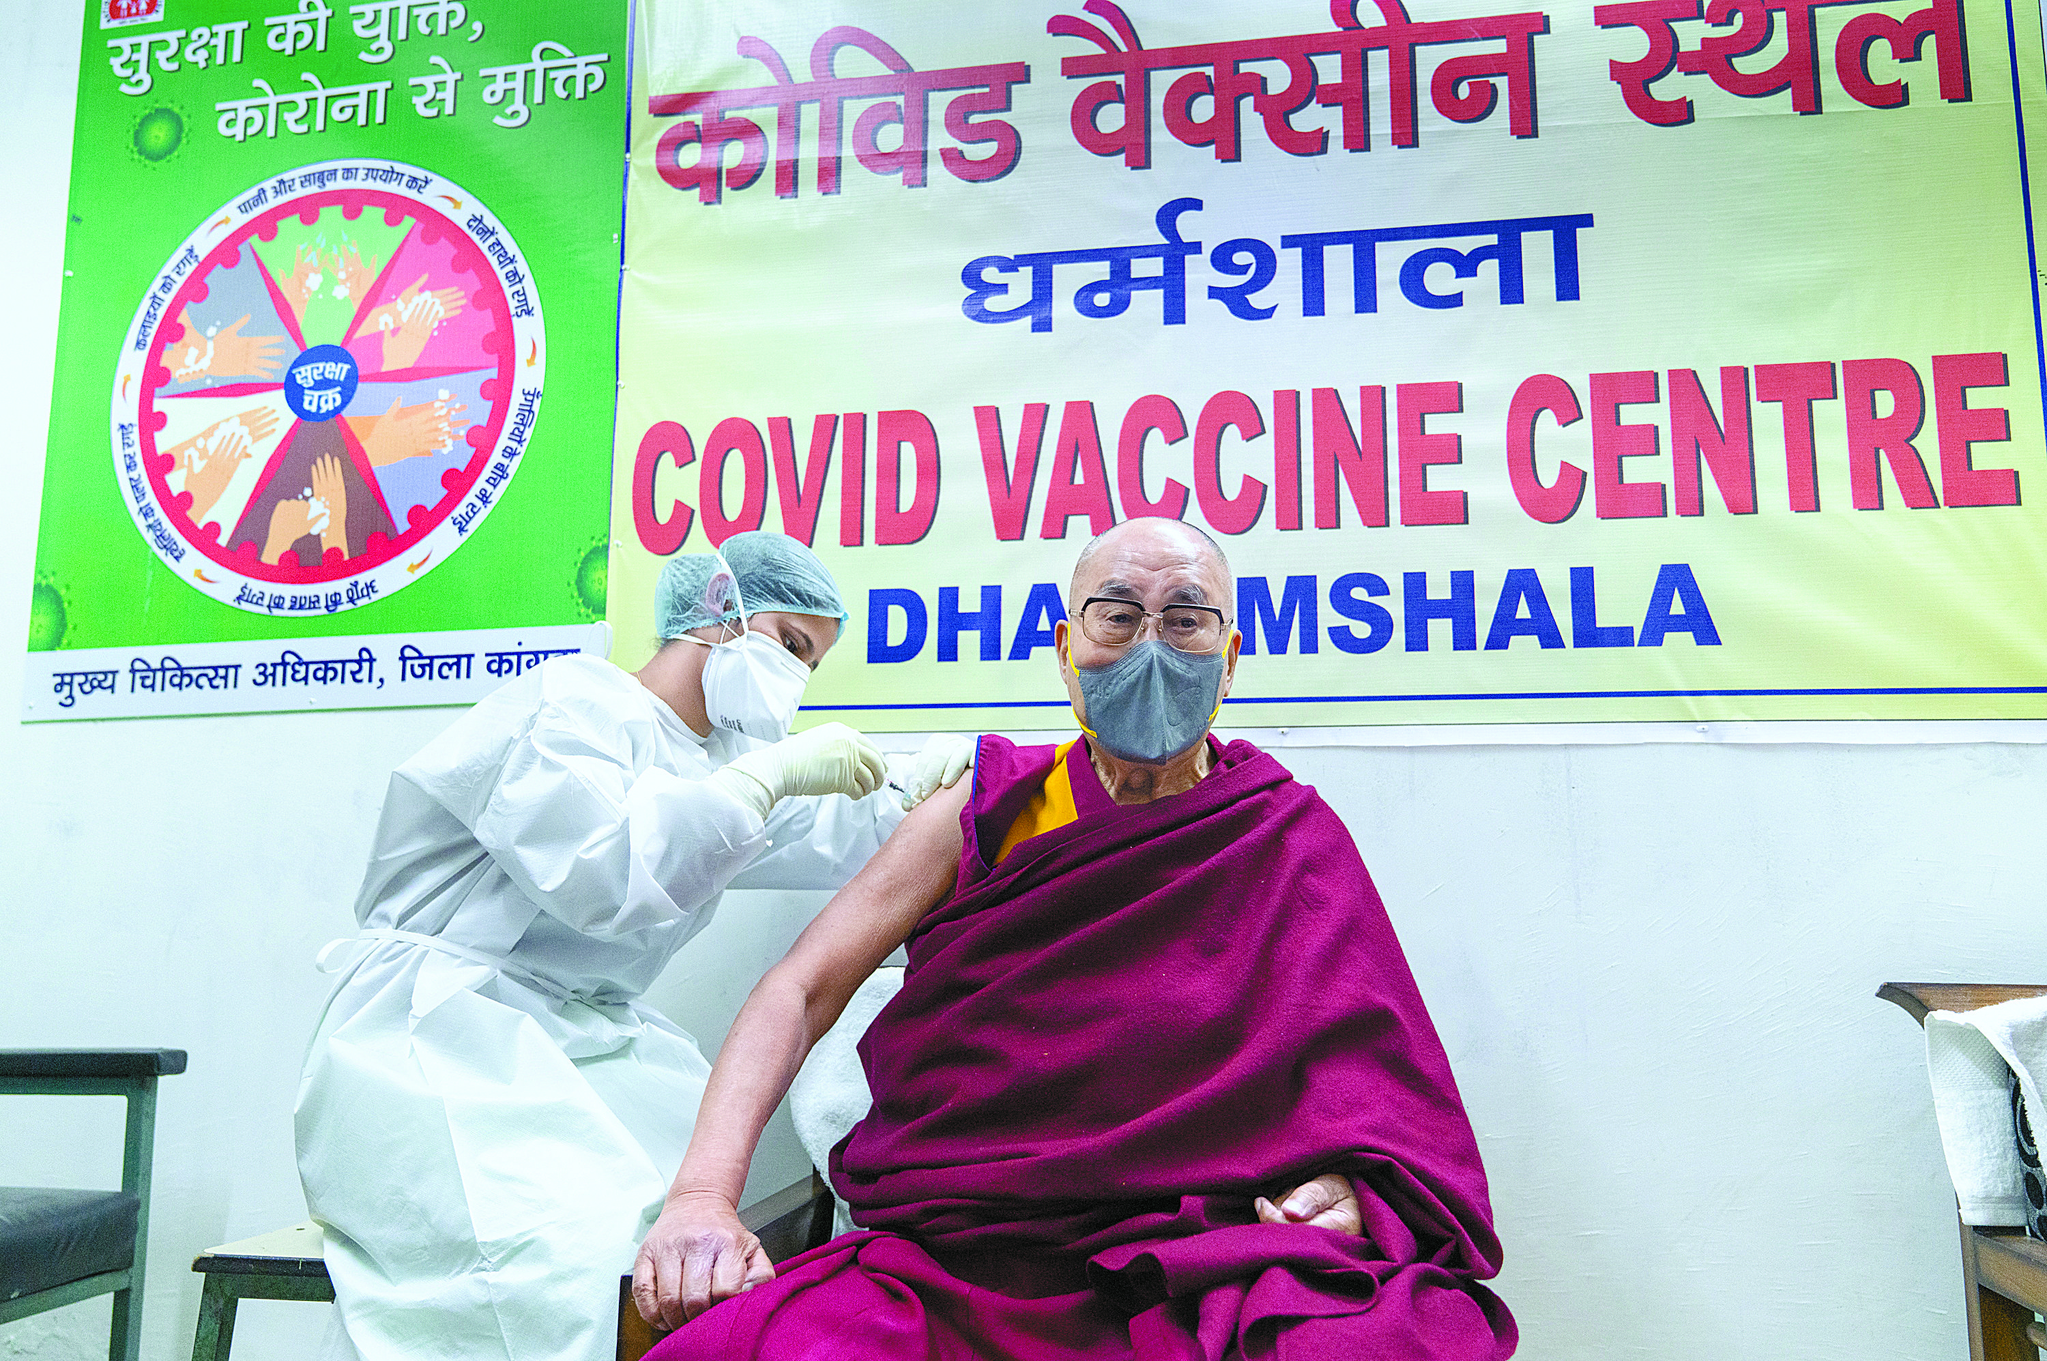 Dalai Lama with AZ vaccine “Vaccination will be very helpful”